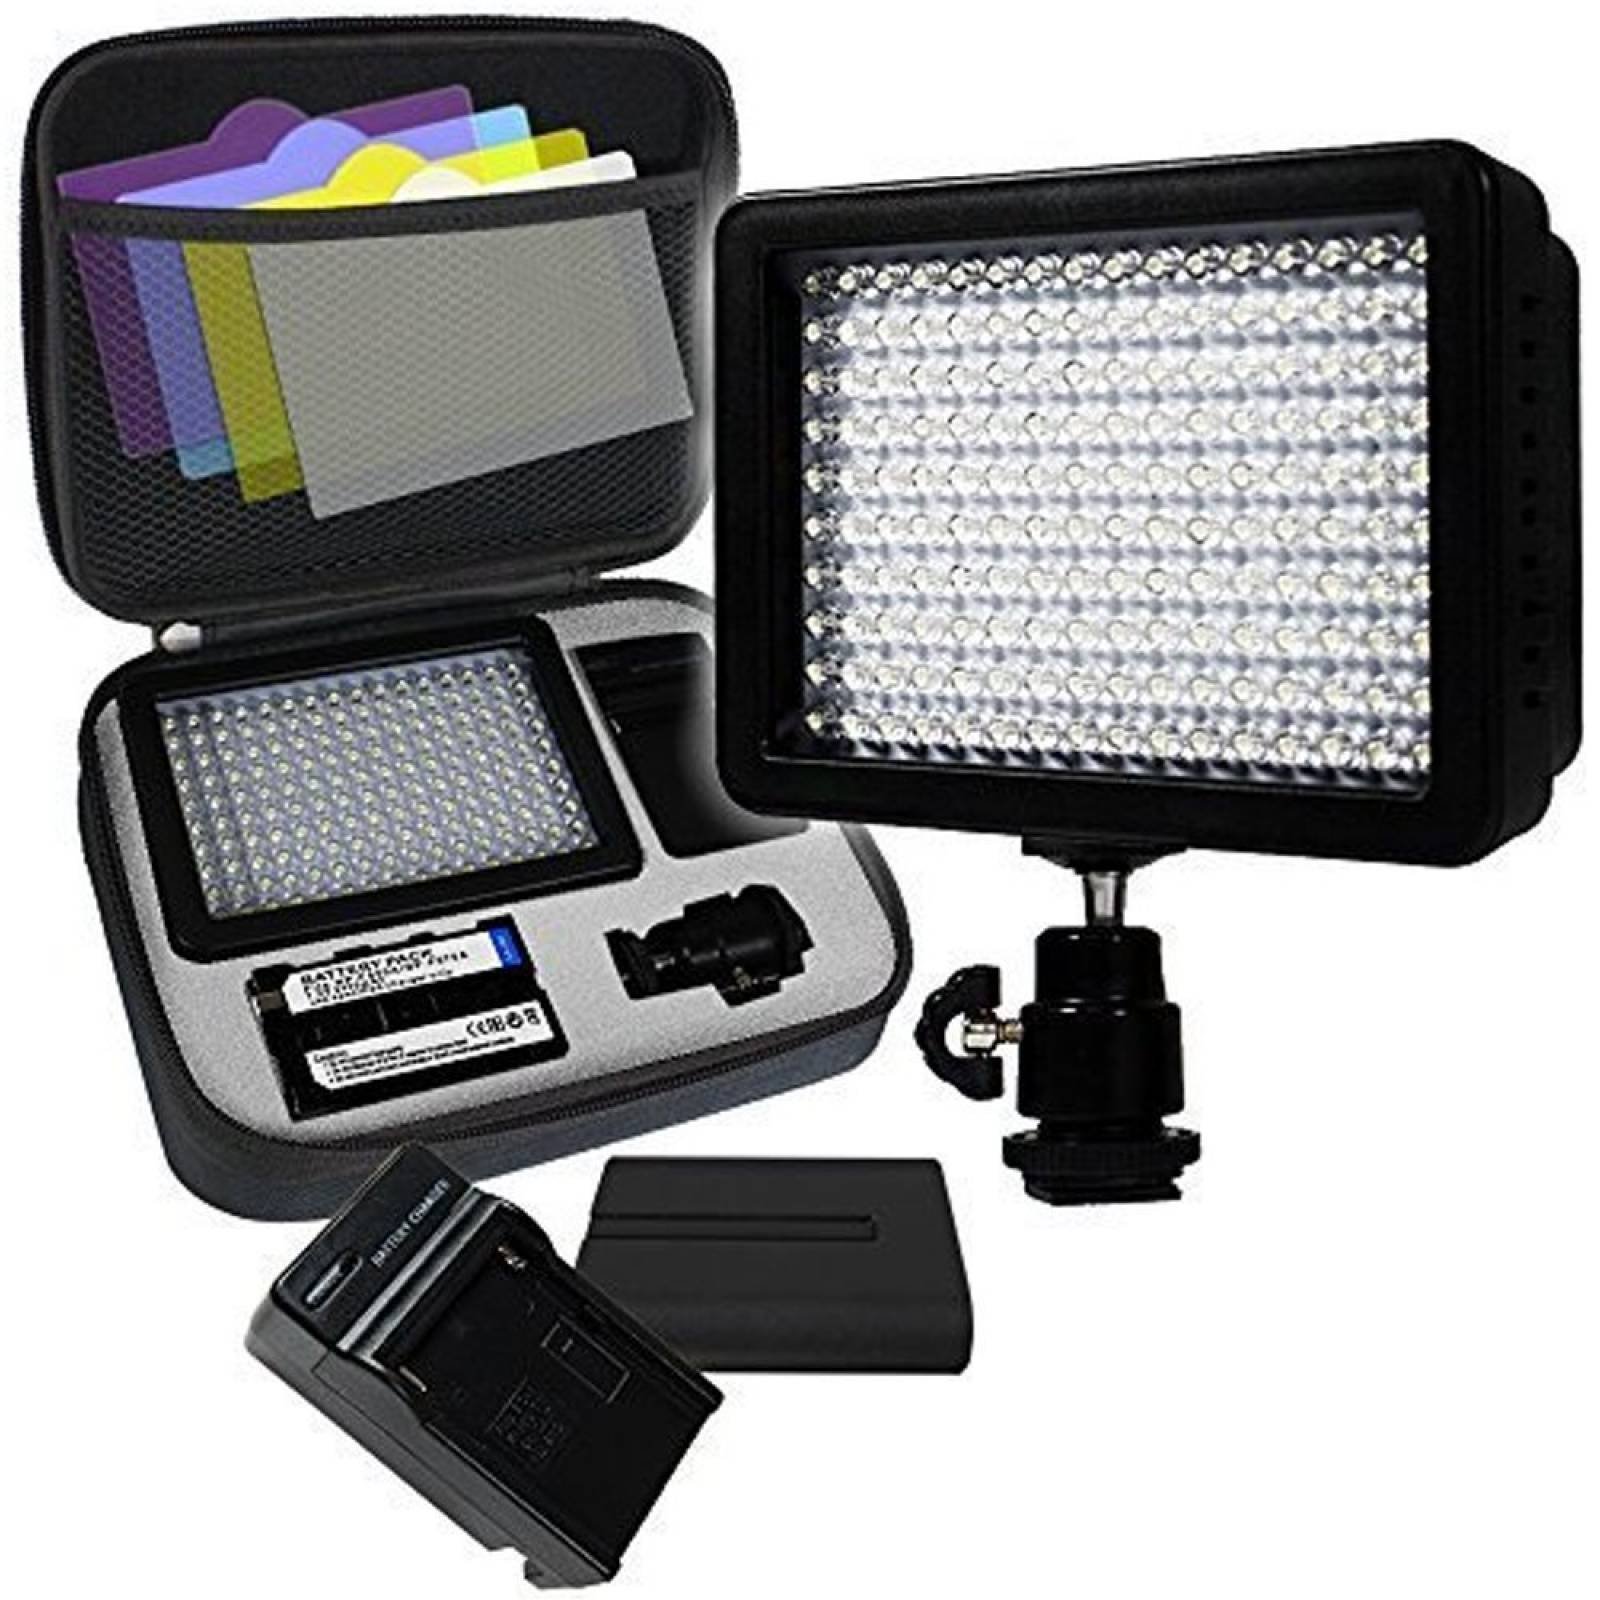 LimoStudio AGG1318 160 LED Video foto luz réflex Digital y